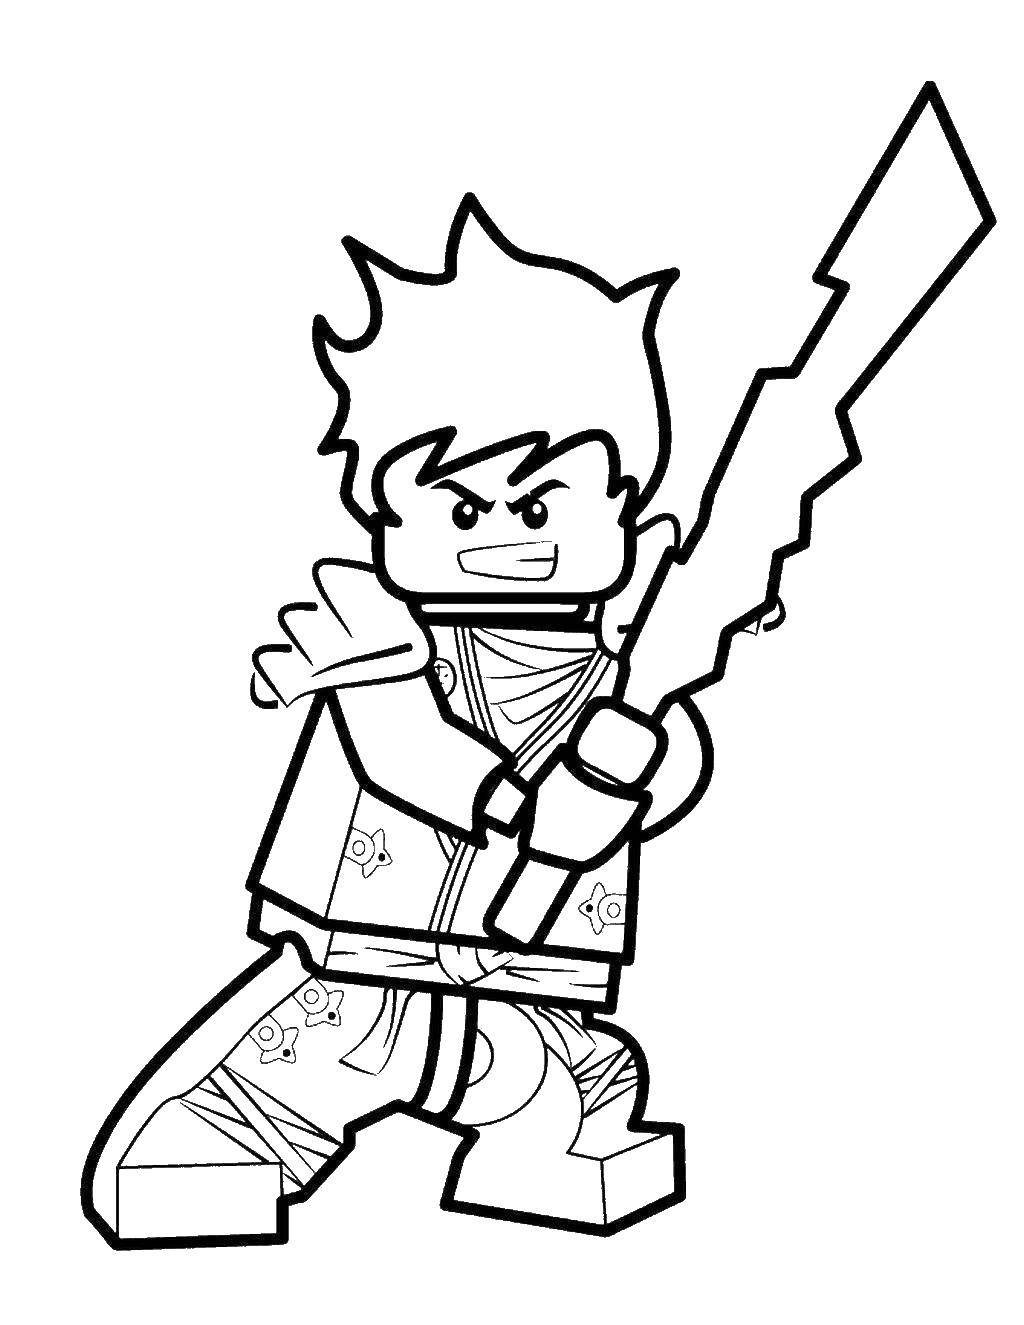 Coloring LEGO warrior. Category LEGO. Tags:  LEGO, ninja.